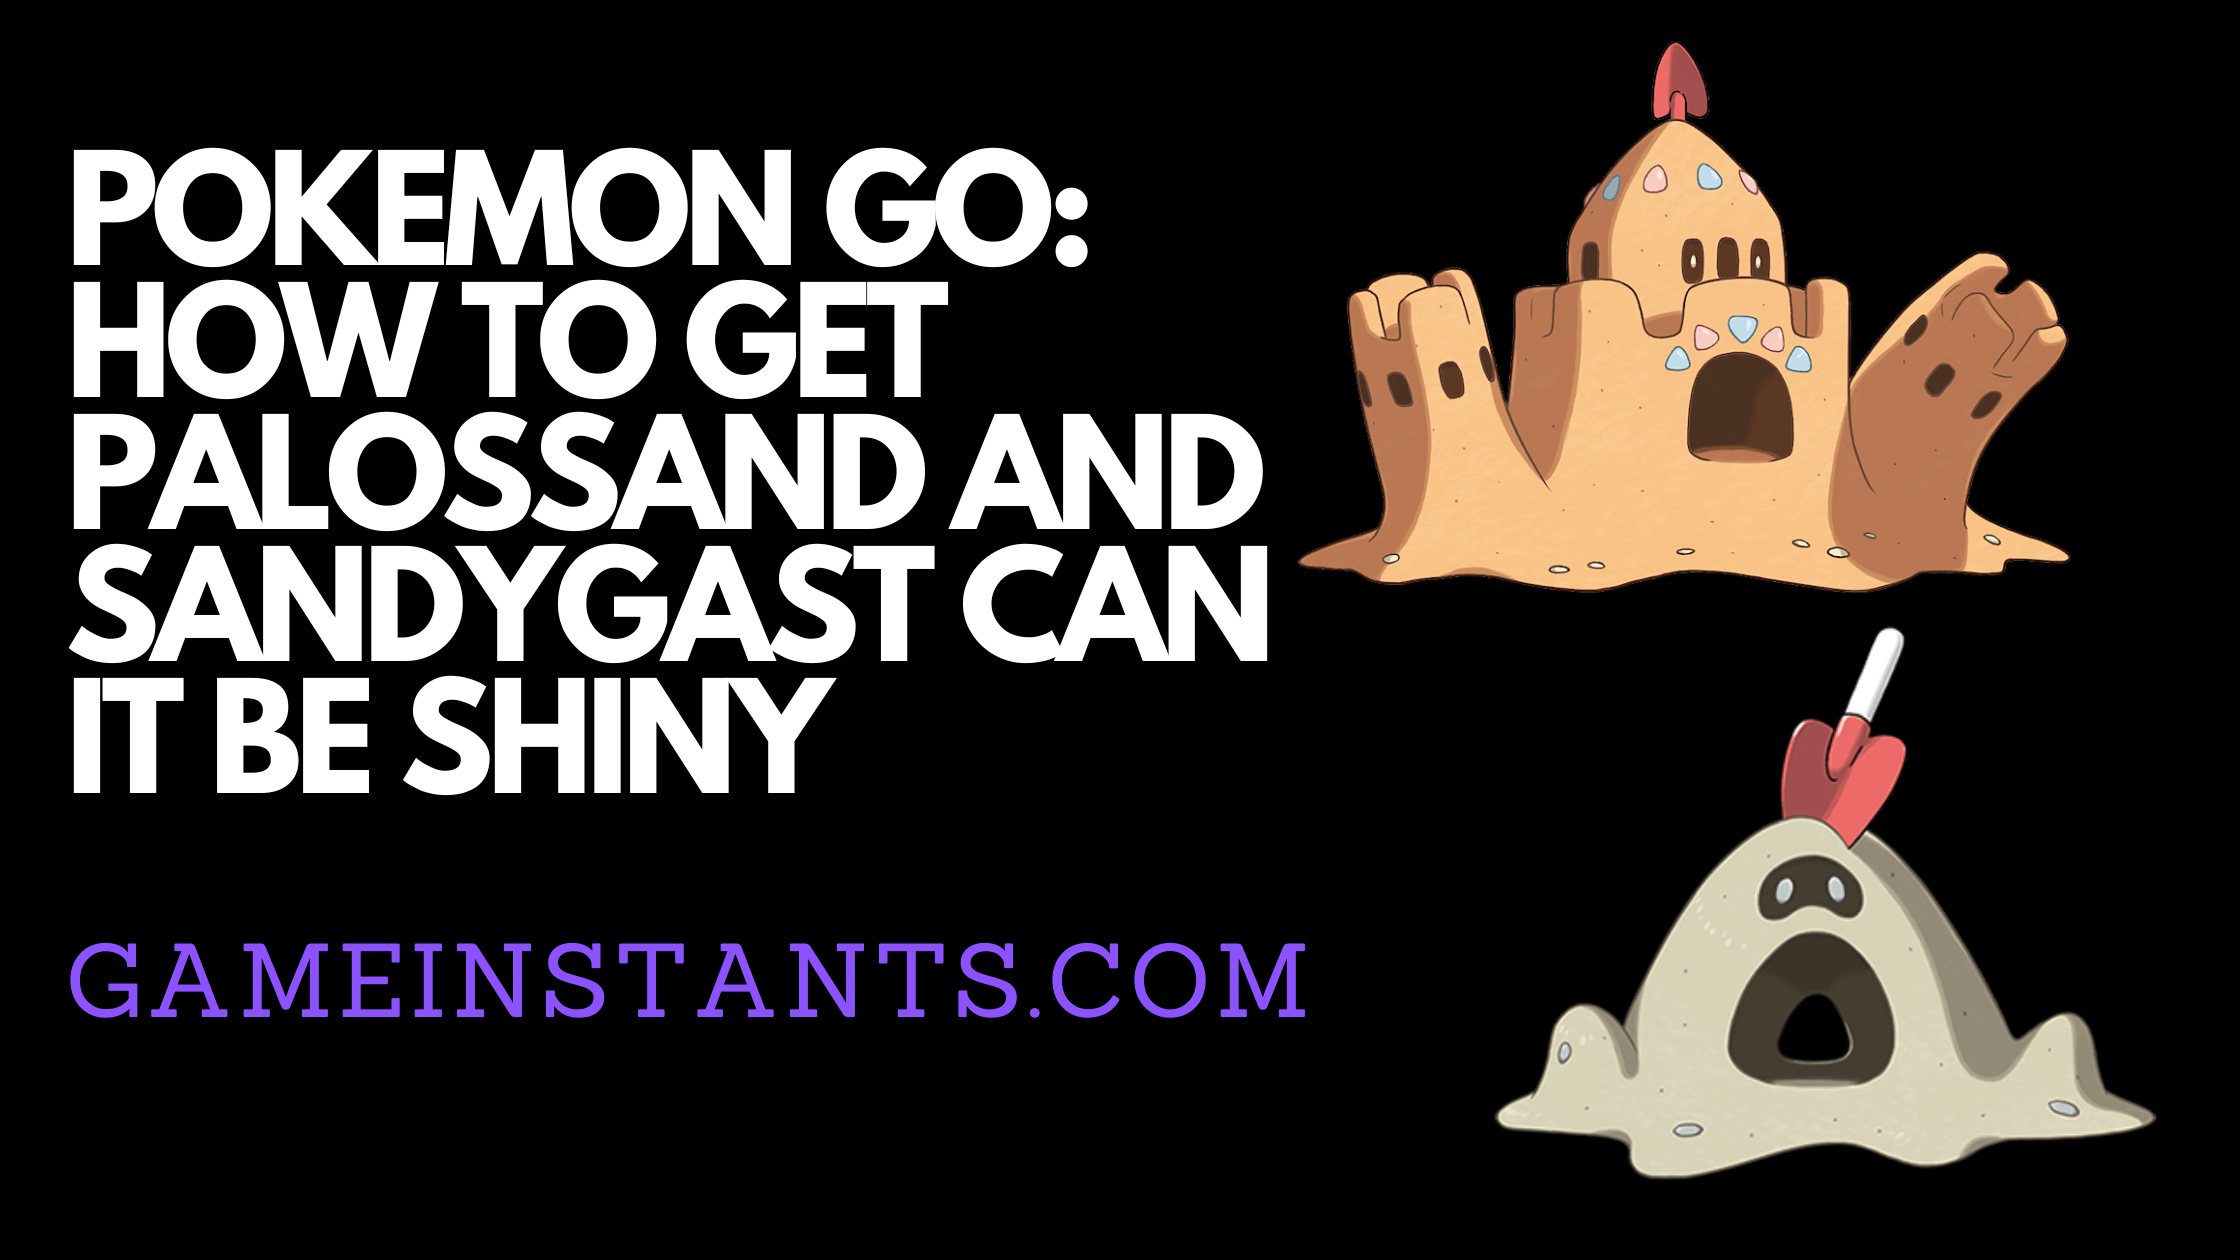 Palossand and Sandygast Pokemon Go